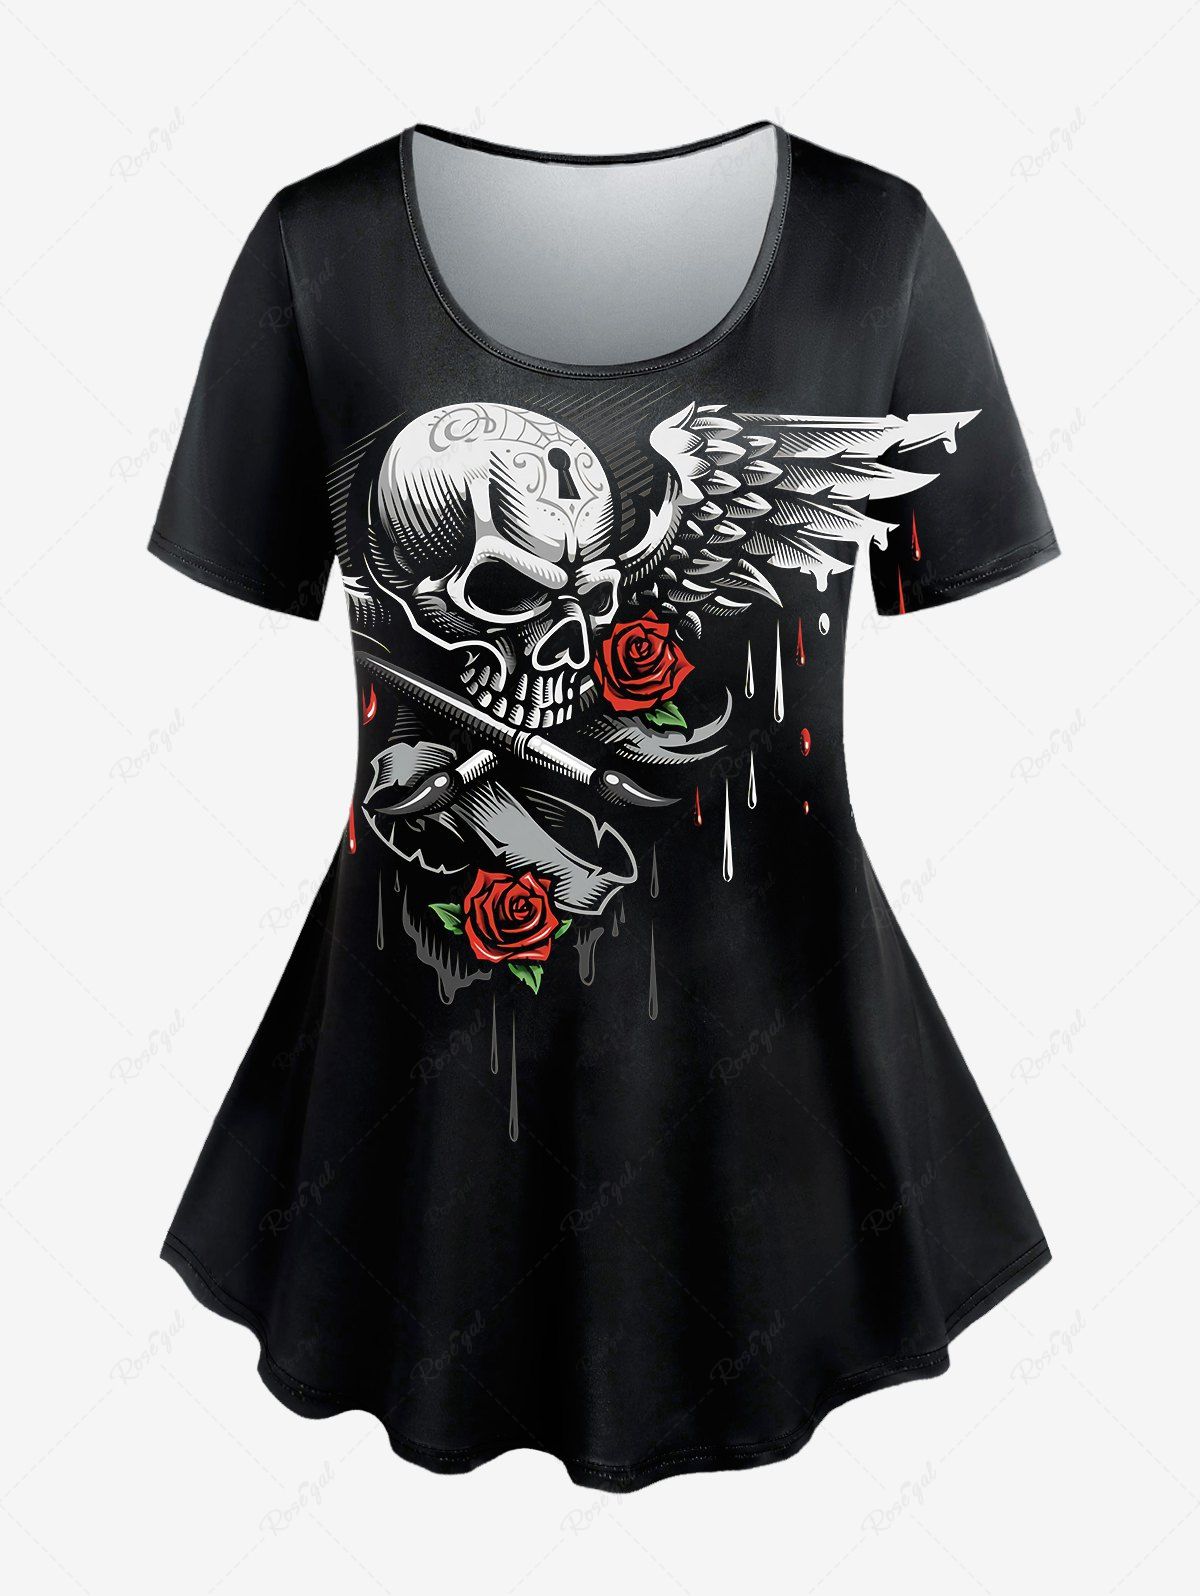 Chic Gothic Skull Rose Wings Printed Short Sleeves Tee  